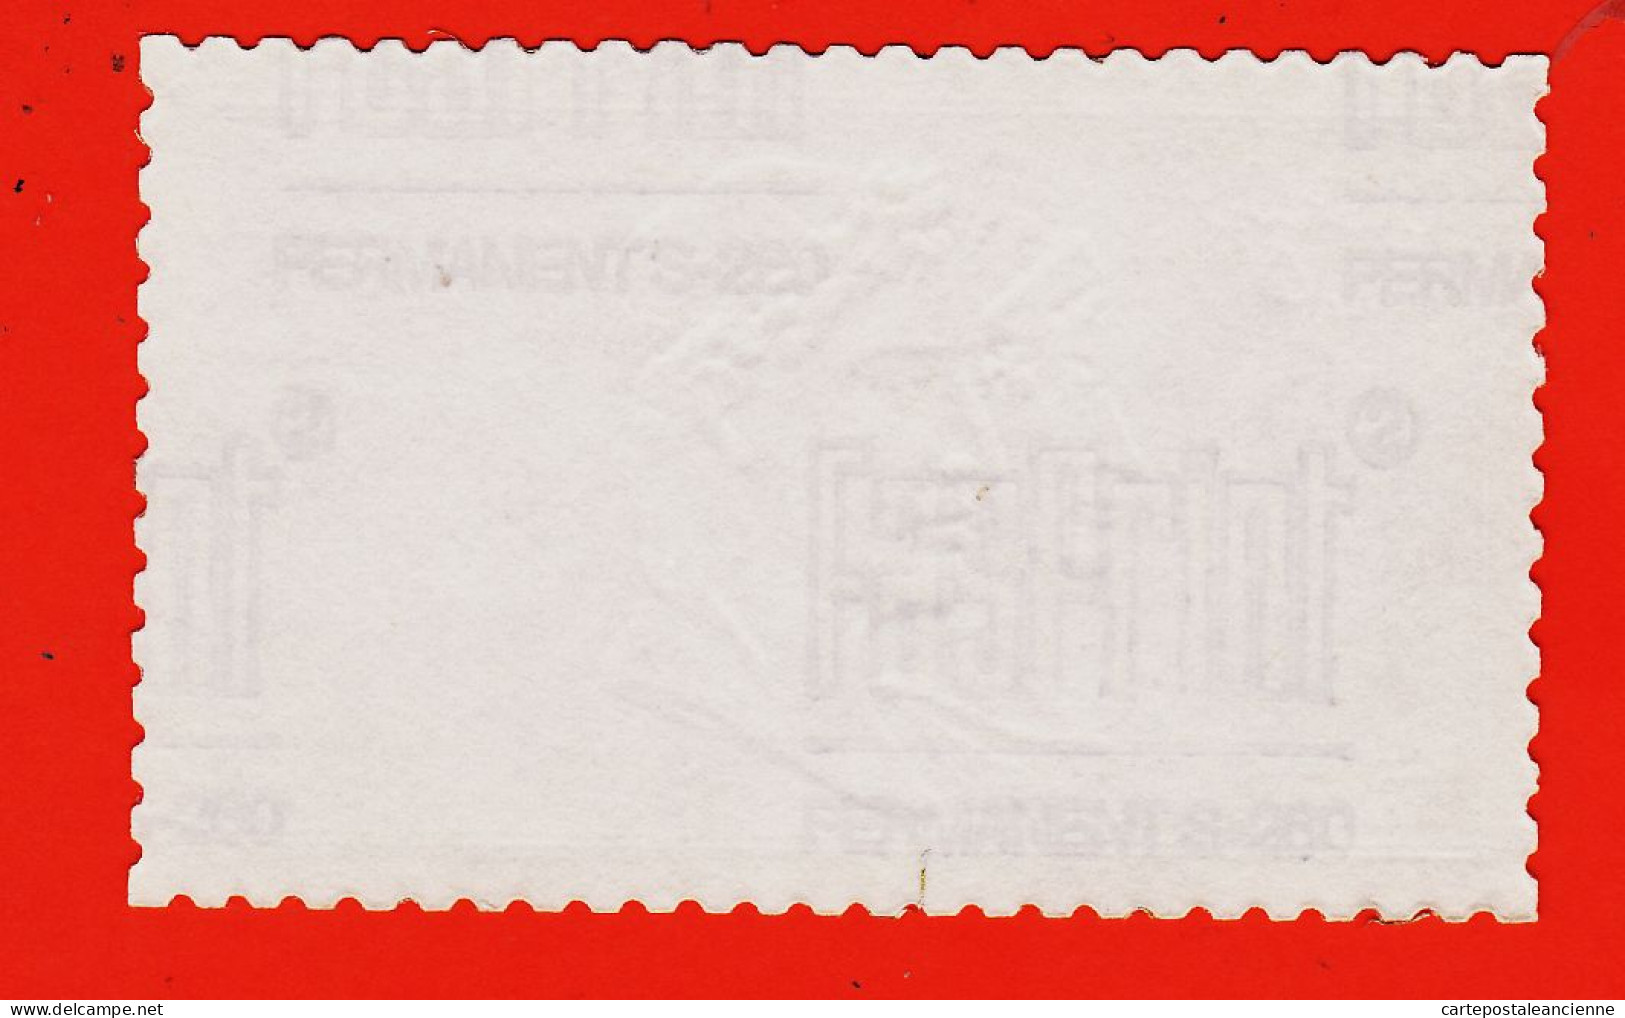 7282 / ⭐ ♥️ Rare NAPOLEON & MARIE-LOUISE Timbre ** Gauffré OR 5 Rial State Of OMAN Dentelé Gold Stamp Mint  - Napoléon